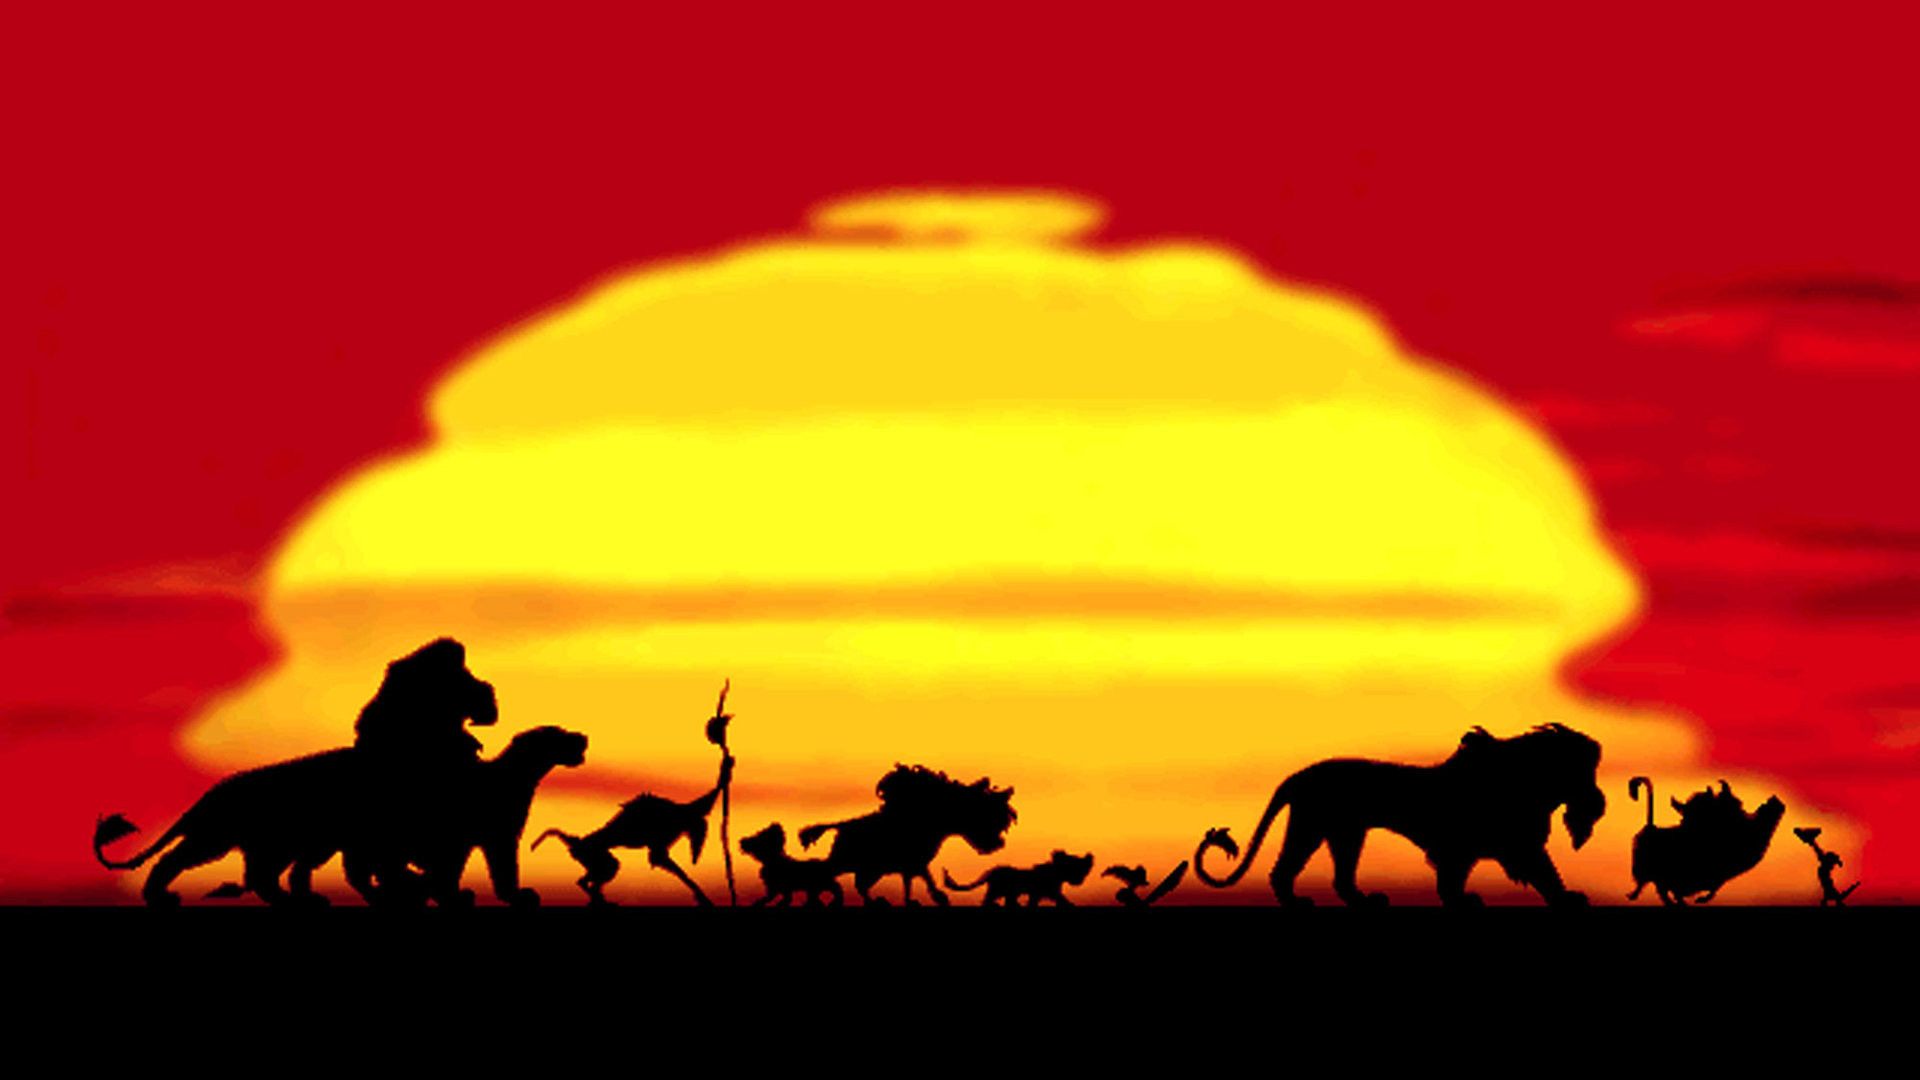 Lion King 2 Wallpaper